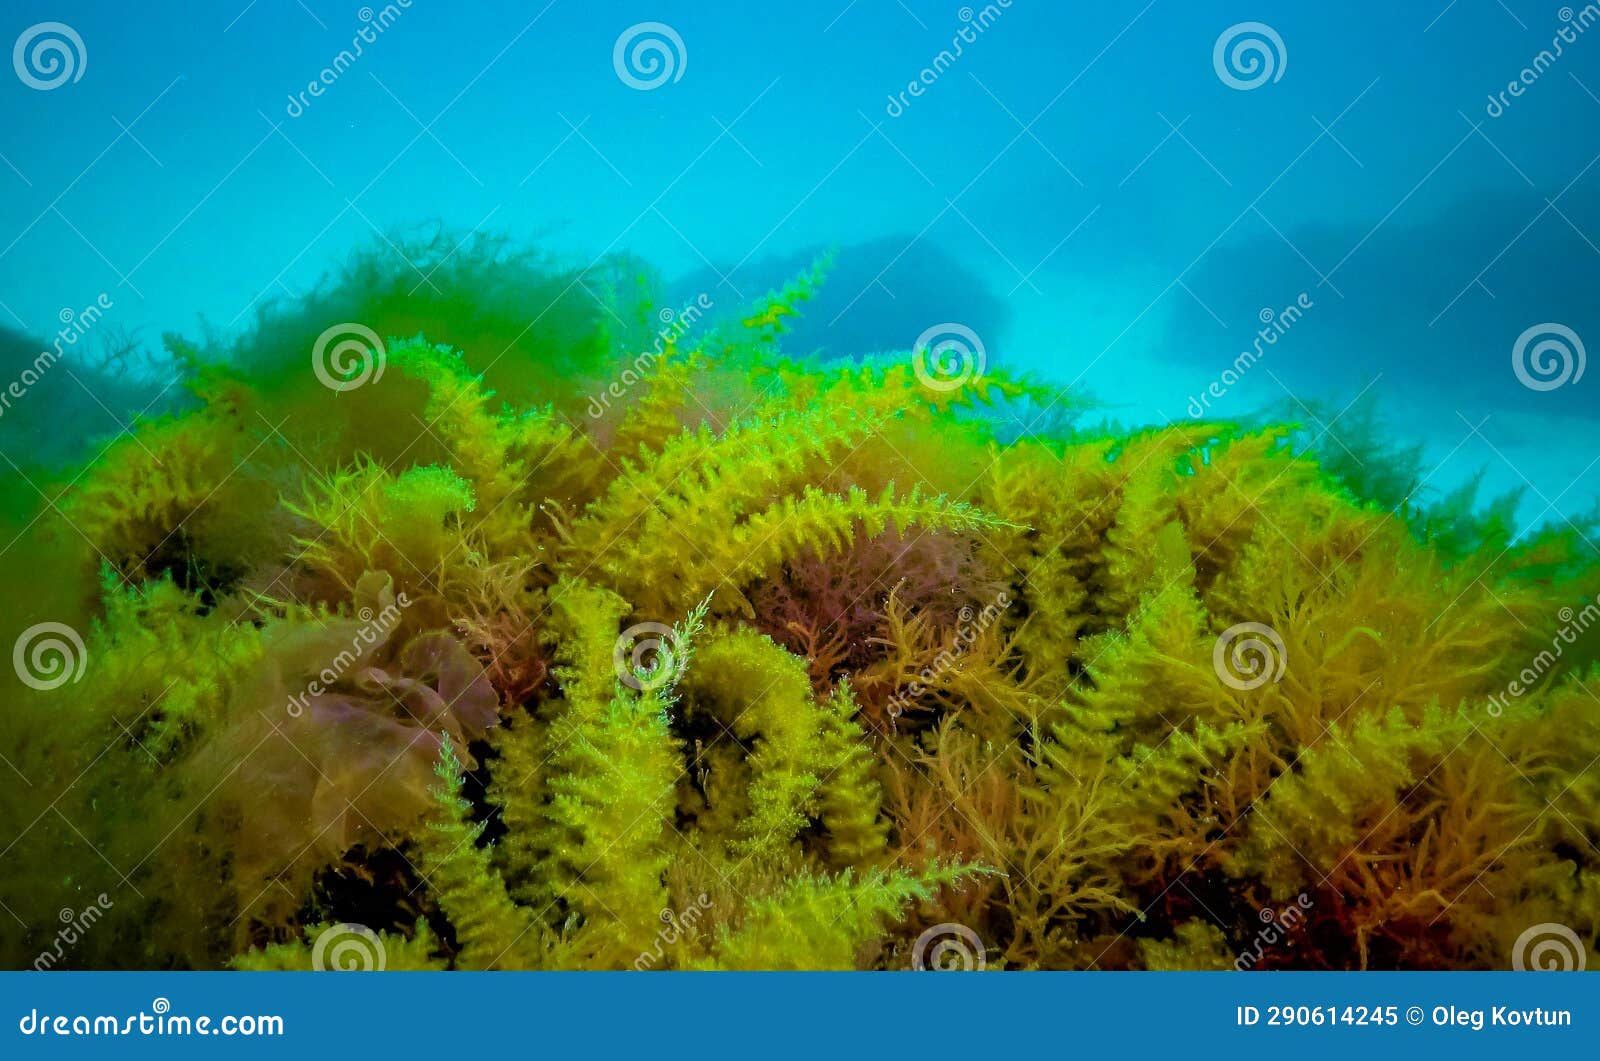 black sea, hydroids obelia, (coelenterates), macrophytes red and green algae